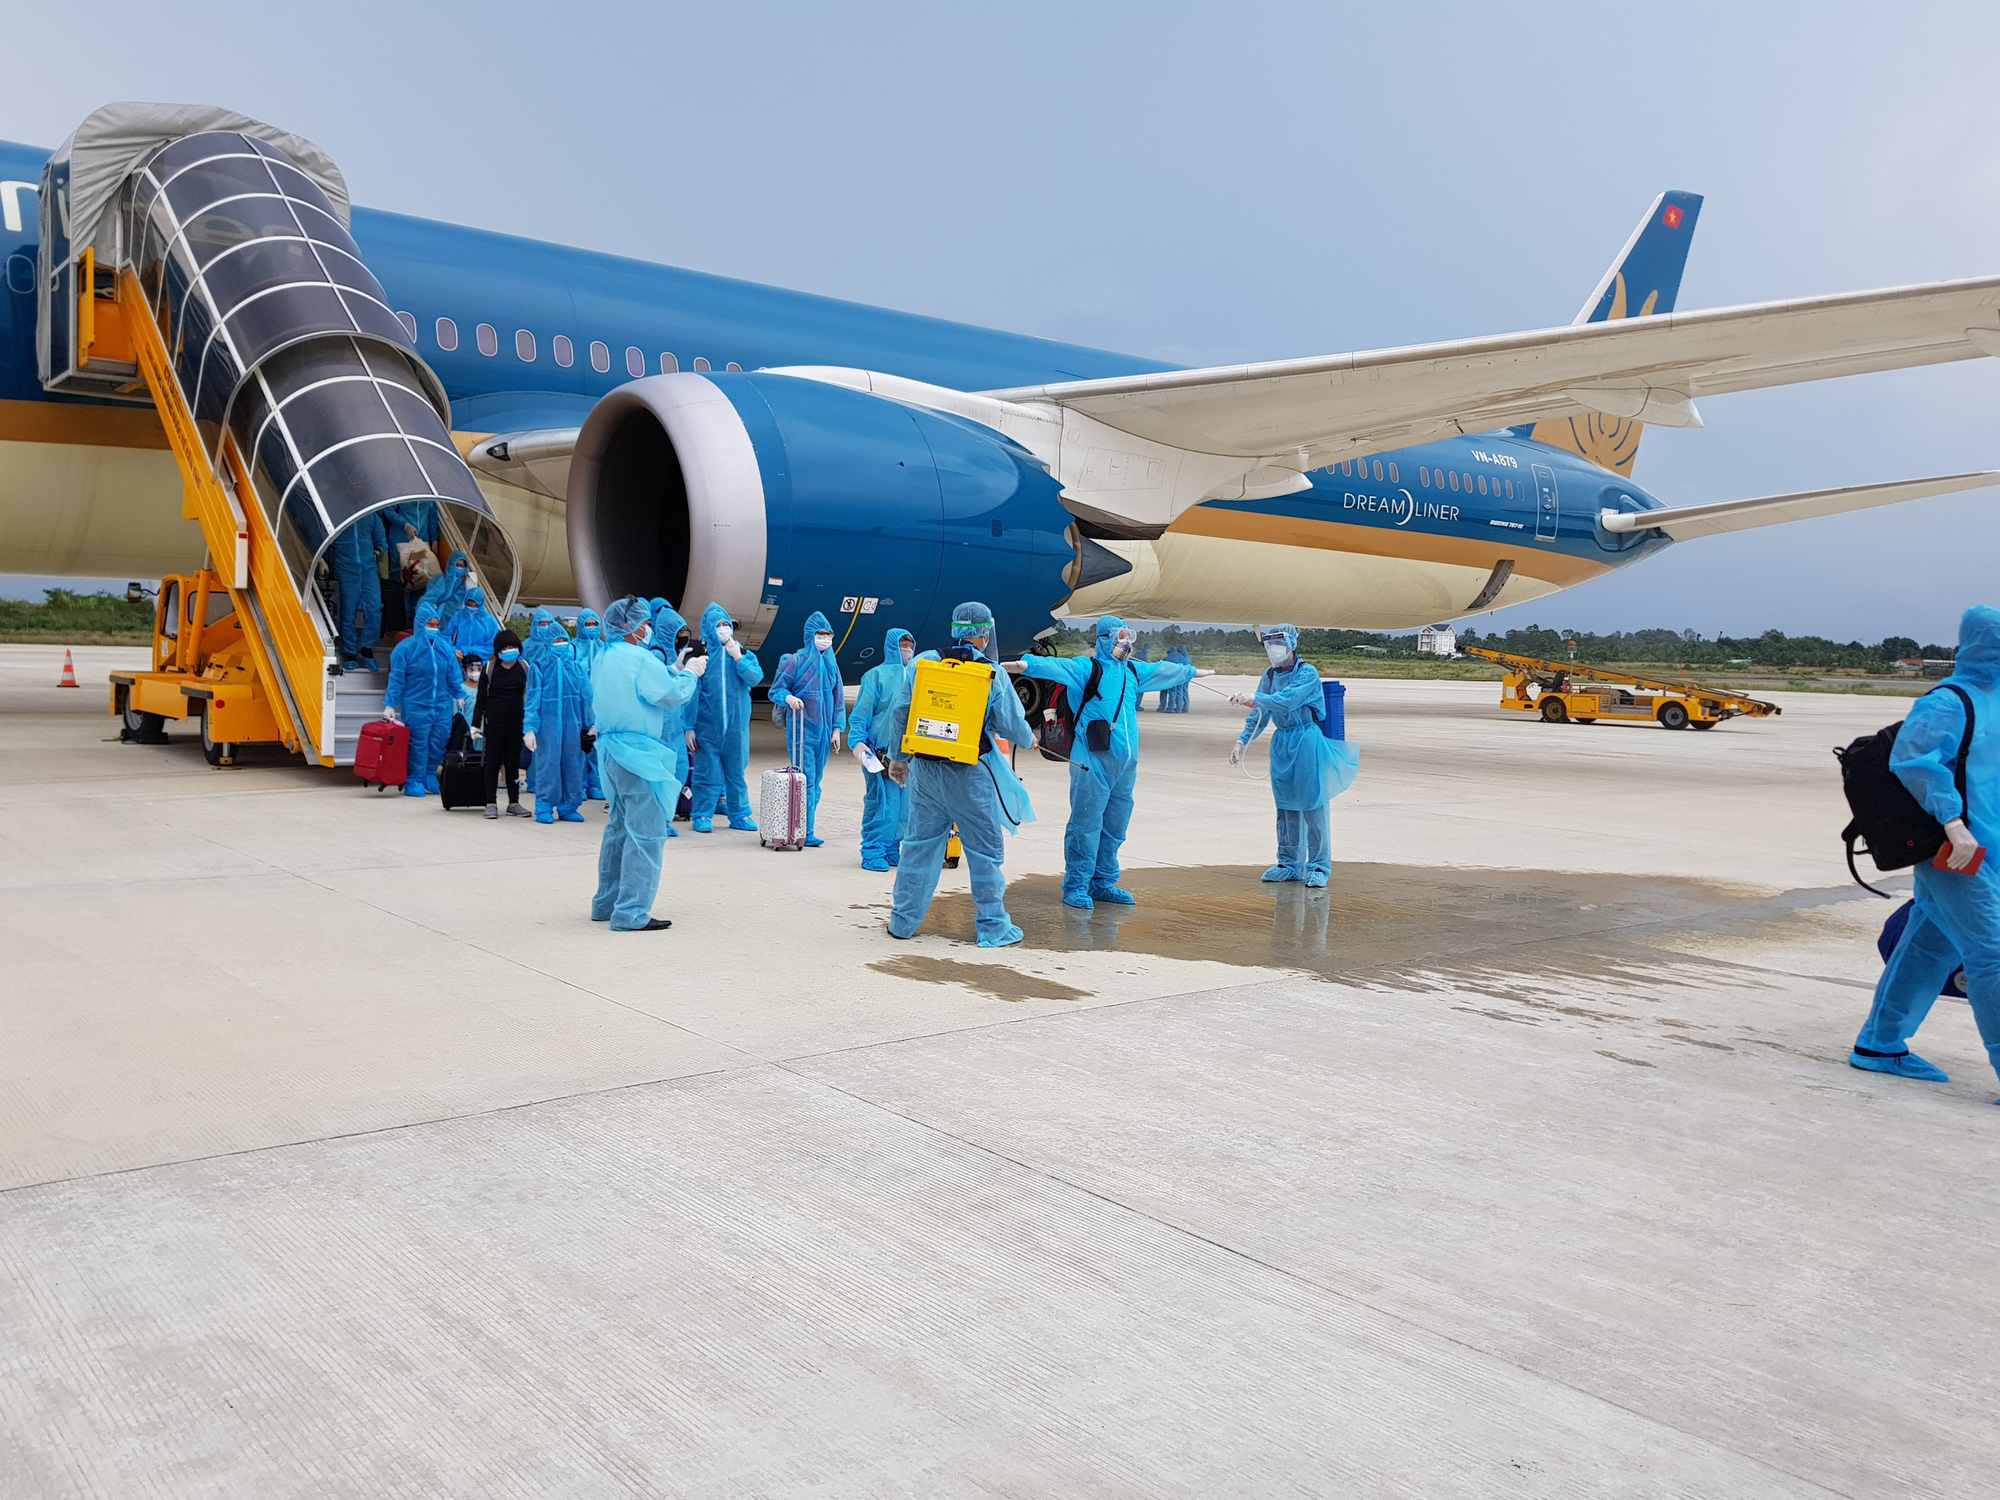 Price of COVID-19 repatriation flight can top $431,000: Vietnam Airlines